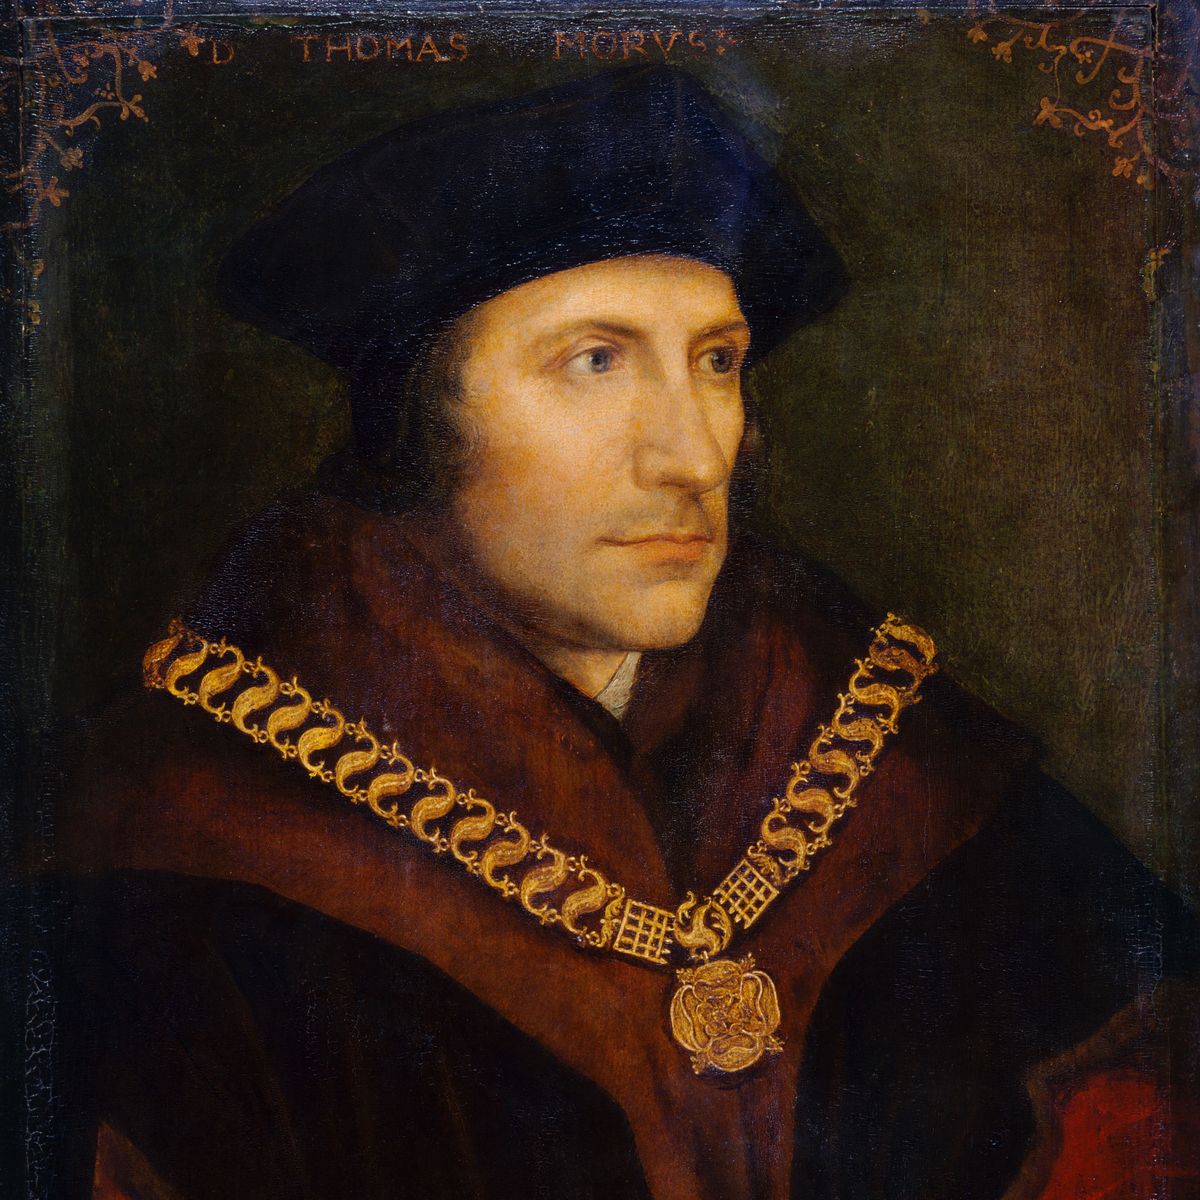 Thomas More - Utopia, Henry VIII & Facts